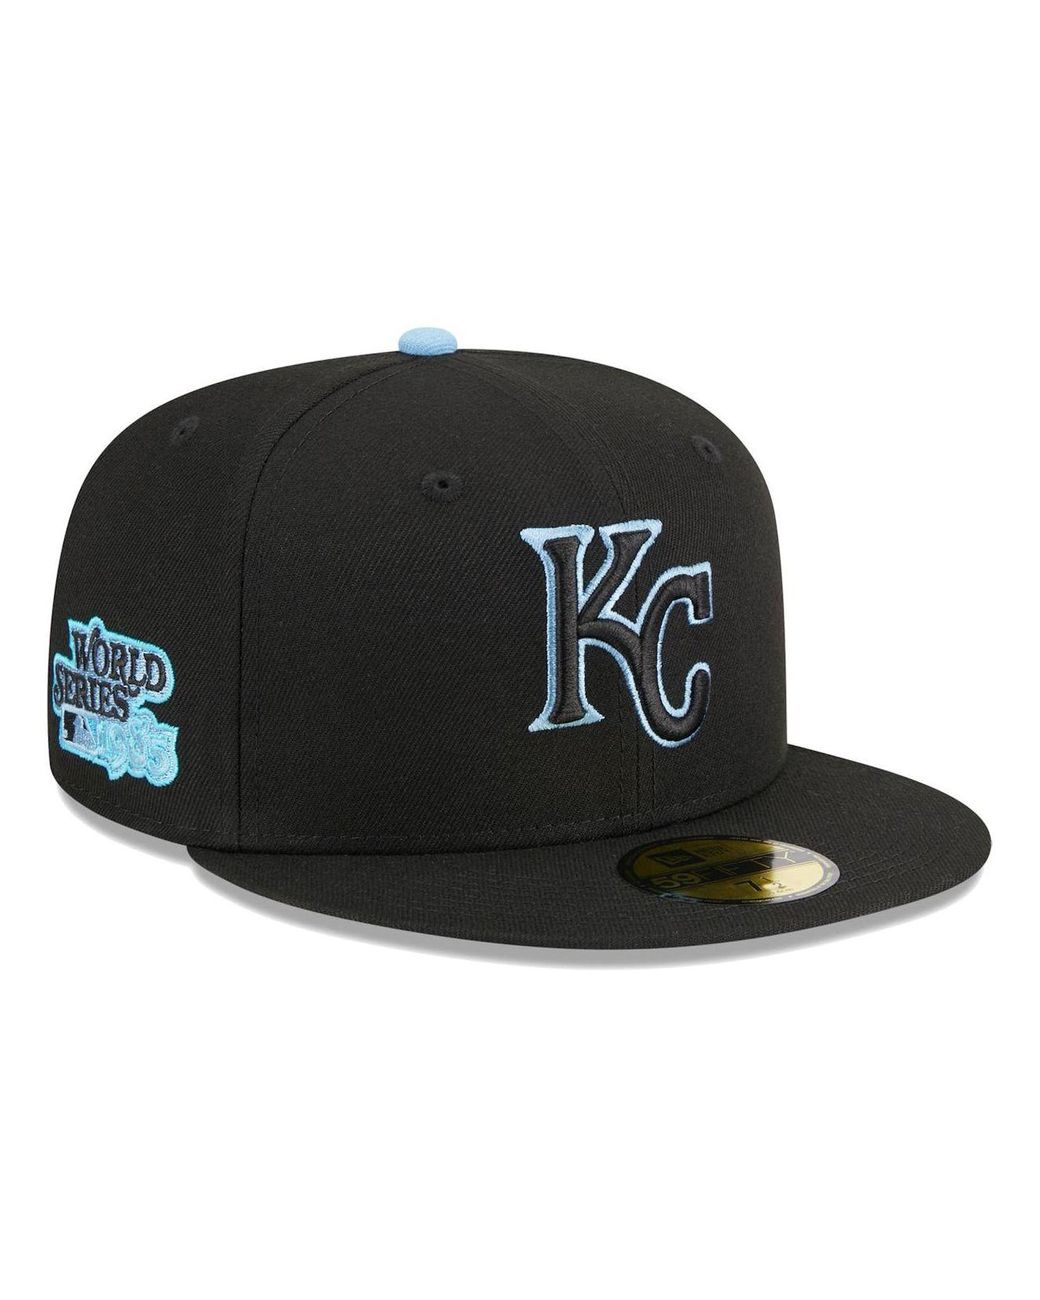 New Era Hat - Kansas City Royals - 2015 World Series 8 1/4 / Cream / Royal